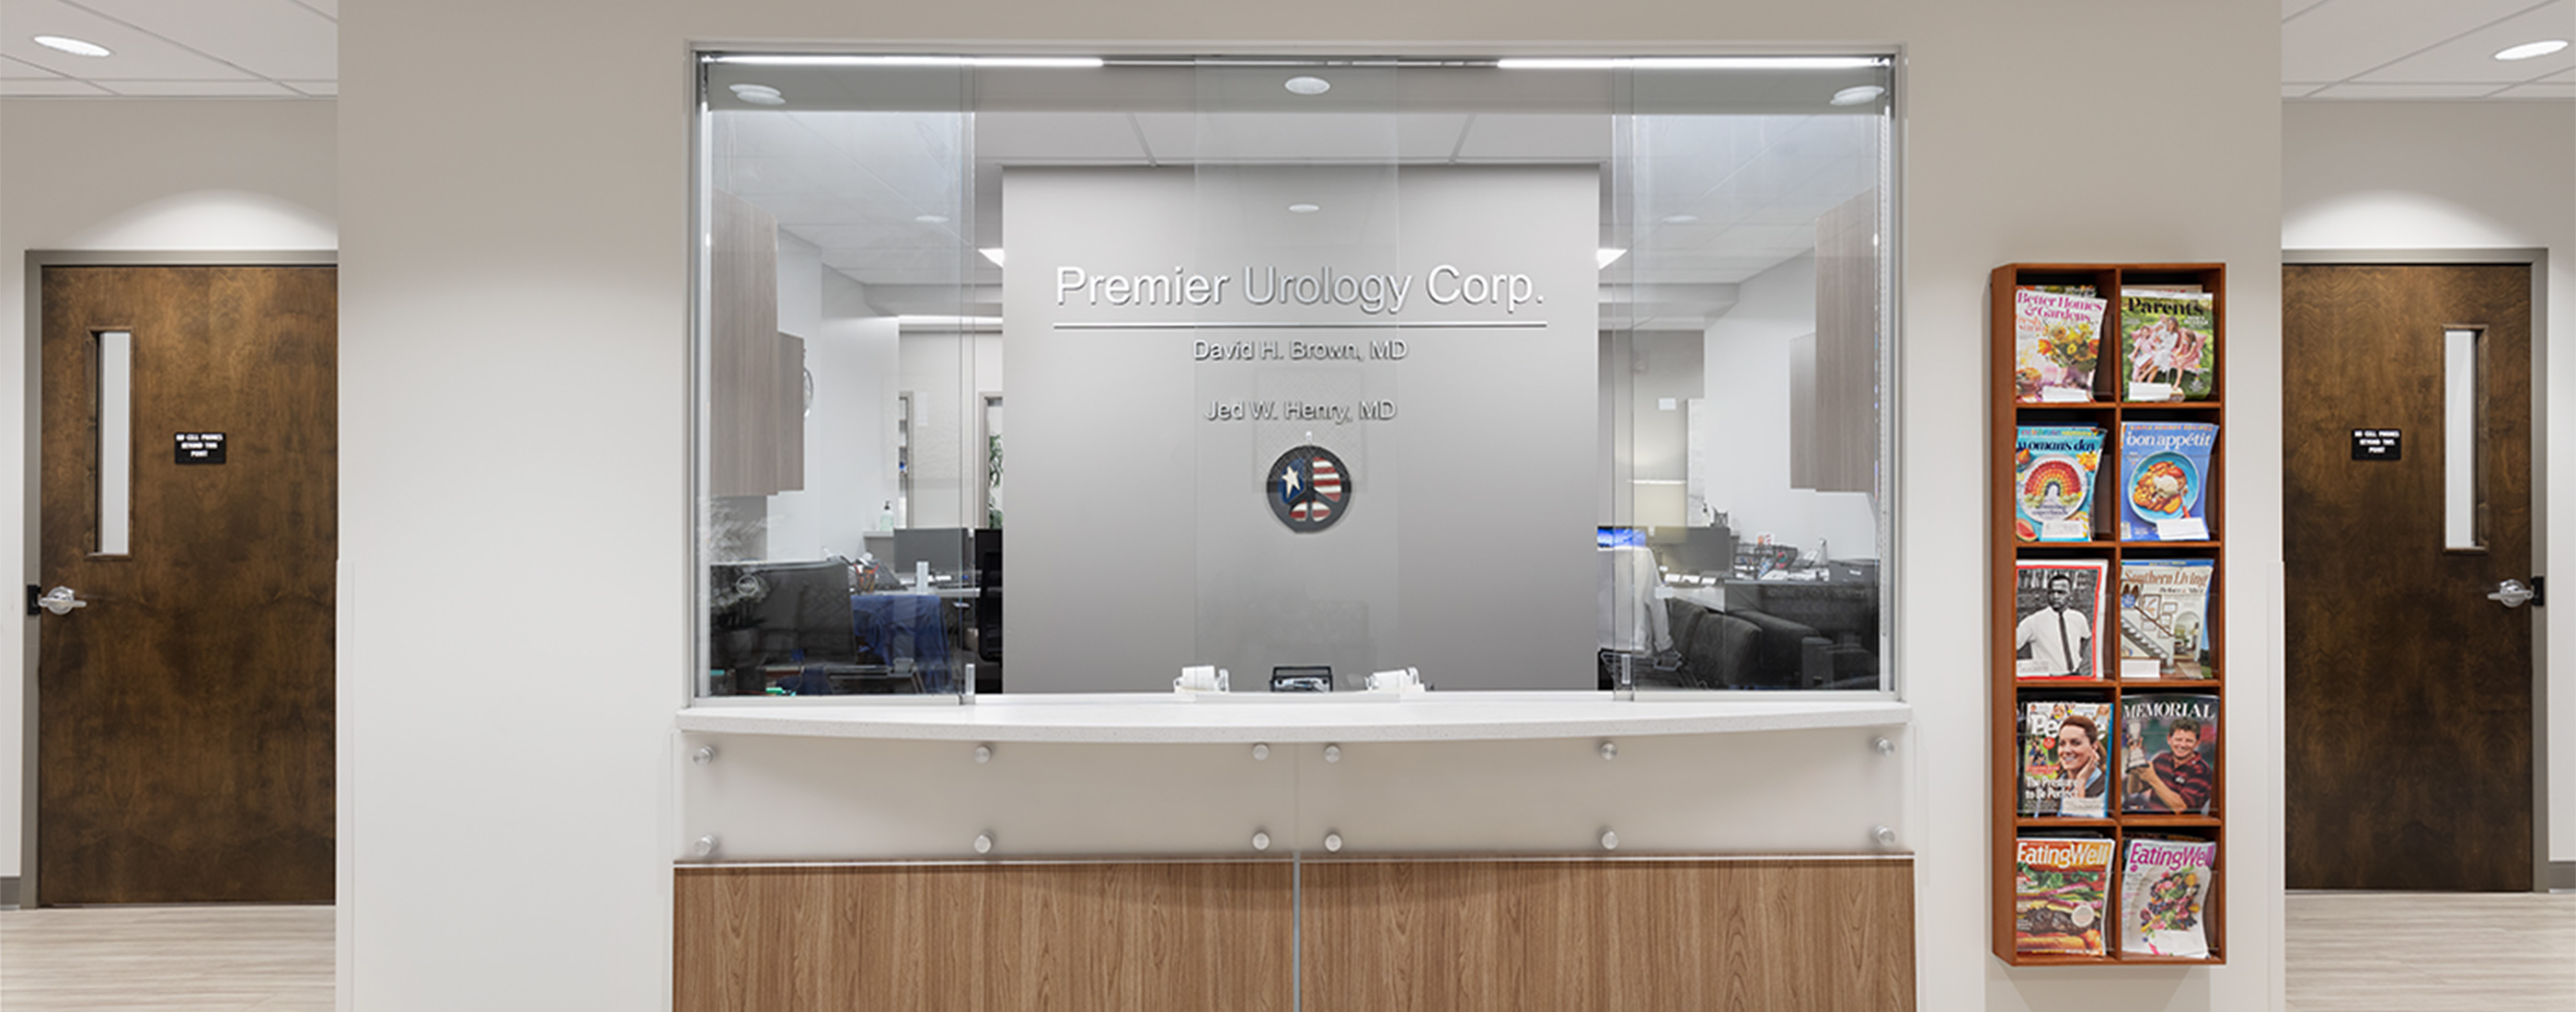 Urology front desk in the Westar Medical Office Building